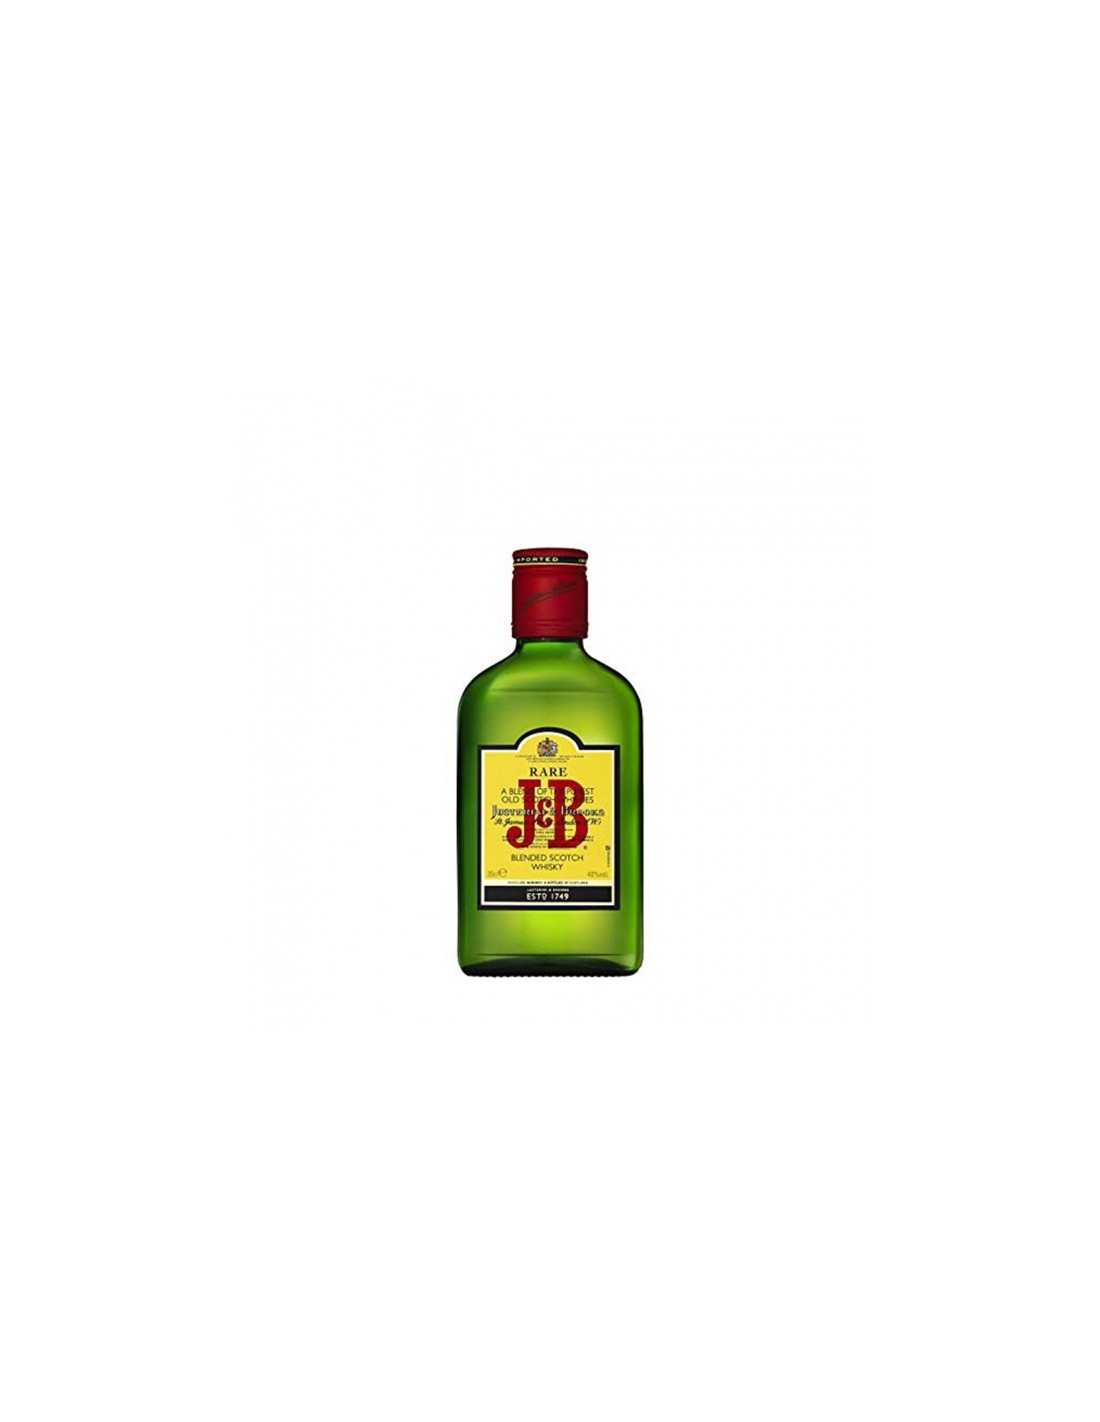 Whisky J&B Rare 0.2L, 40% alc., Scotia alcooldiscount.ro